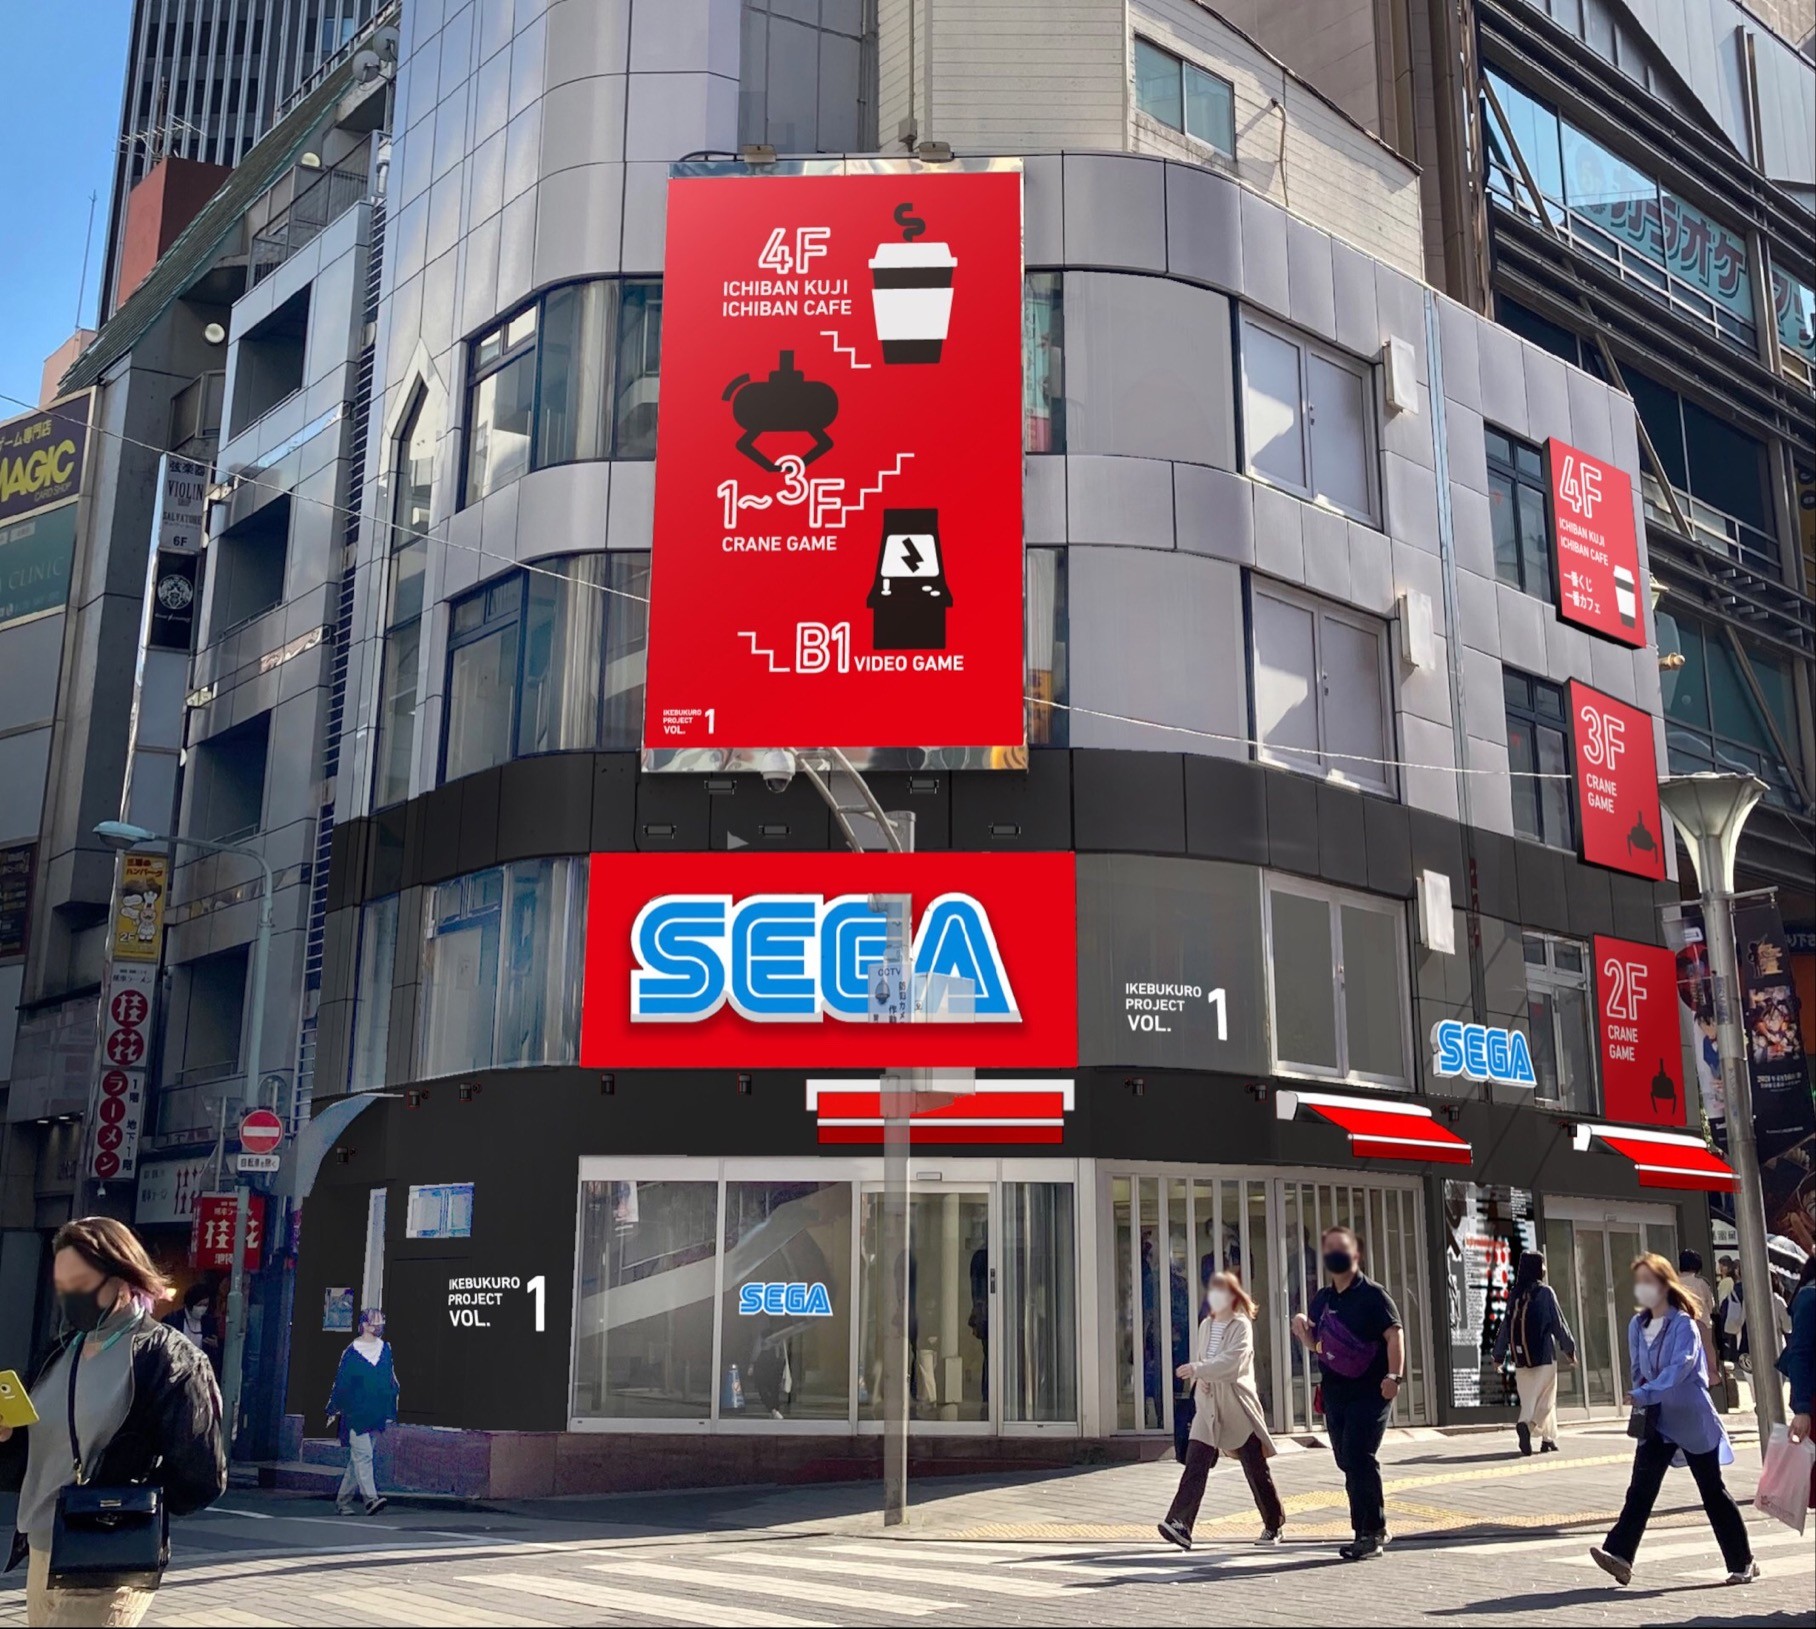 Segaのゲームセンター店名がすべて Gigo に変更へ 運営会社名も変わり 店舗からsegaの表記が消える ゲーム エンタメ最新情報のファミ通 Com